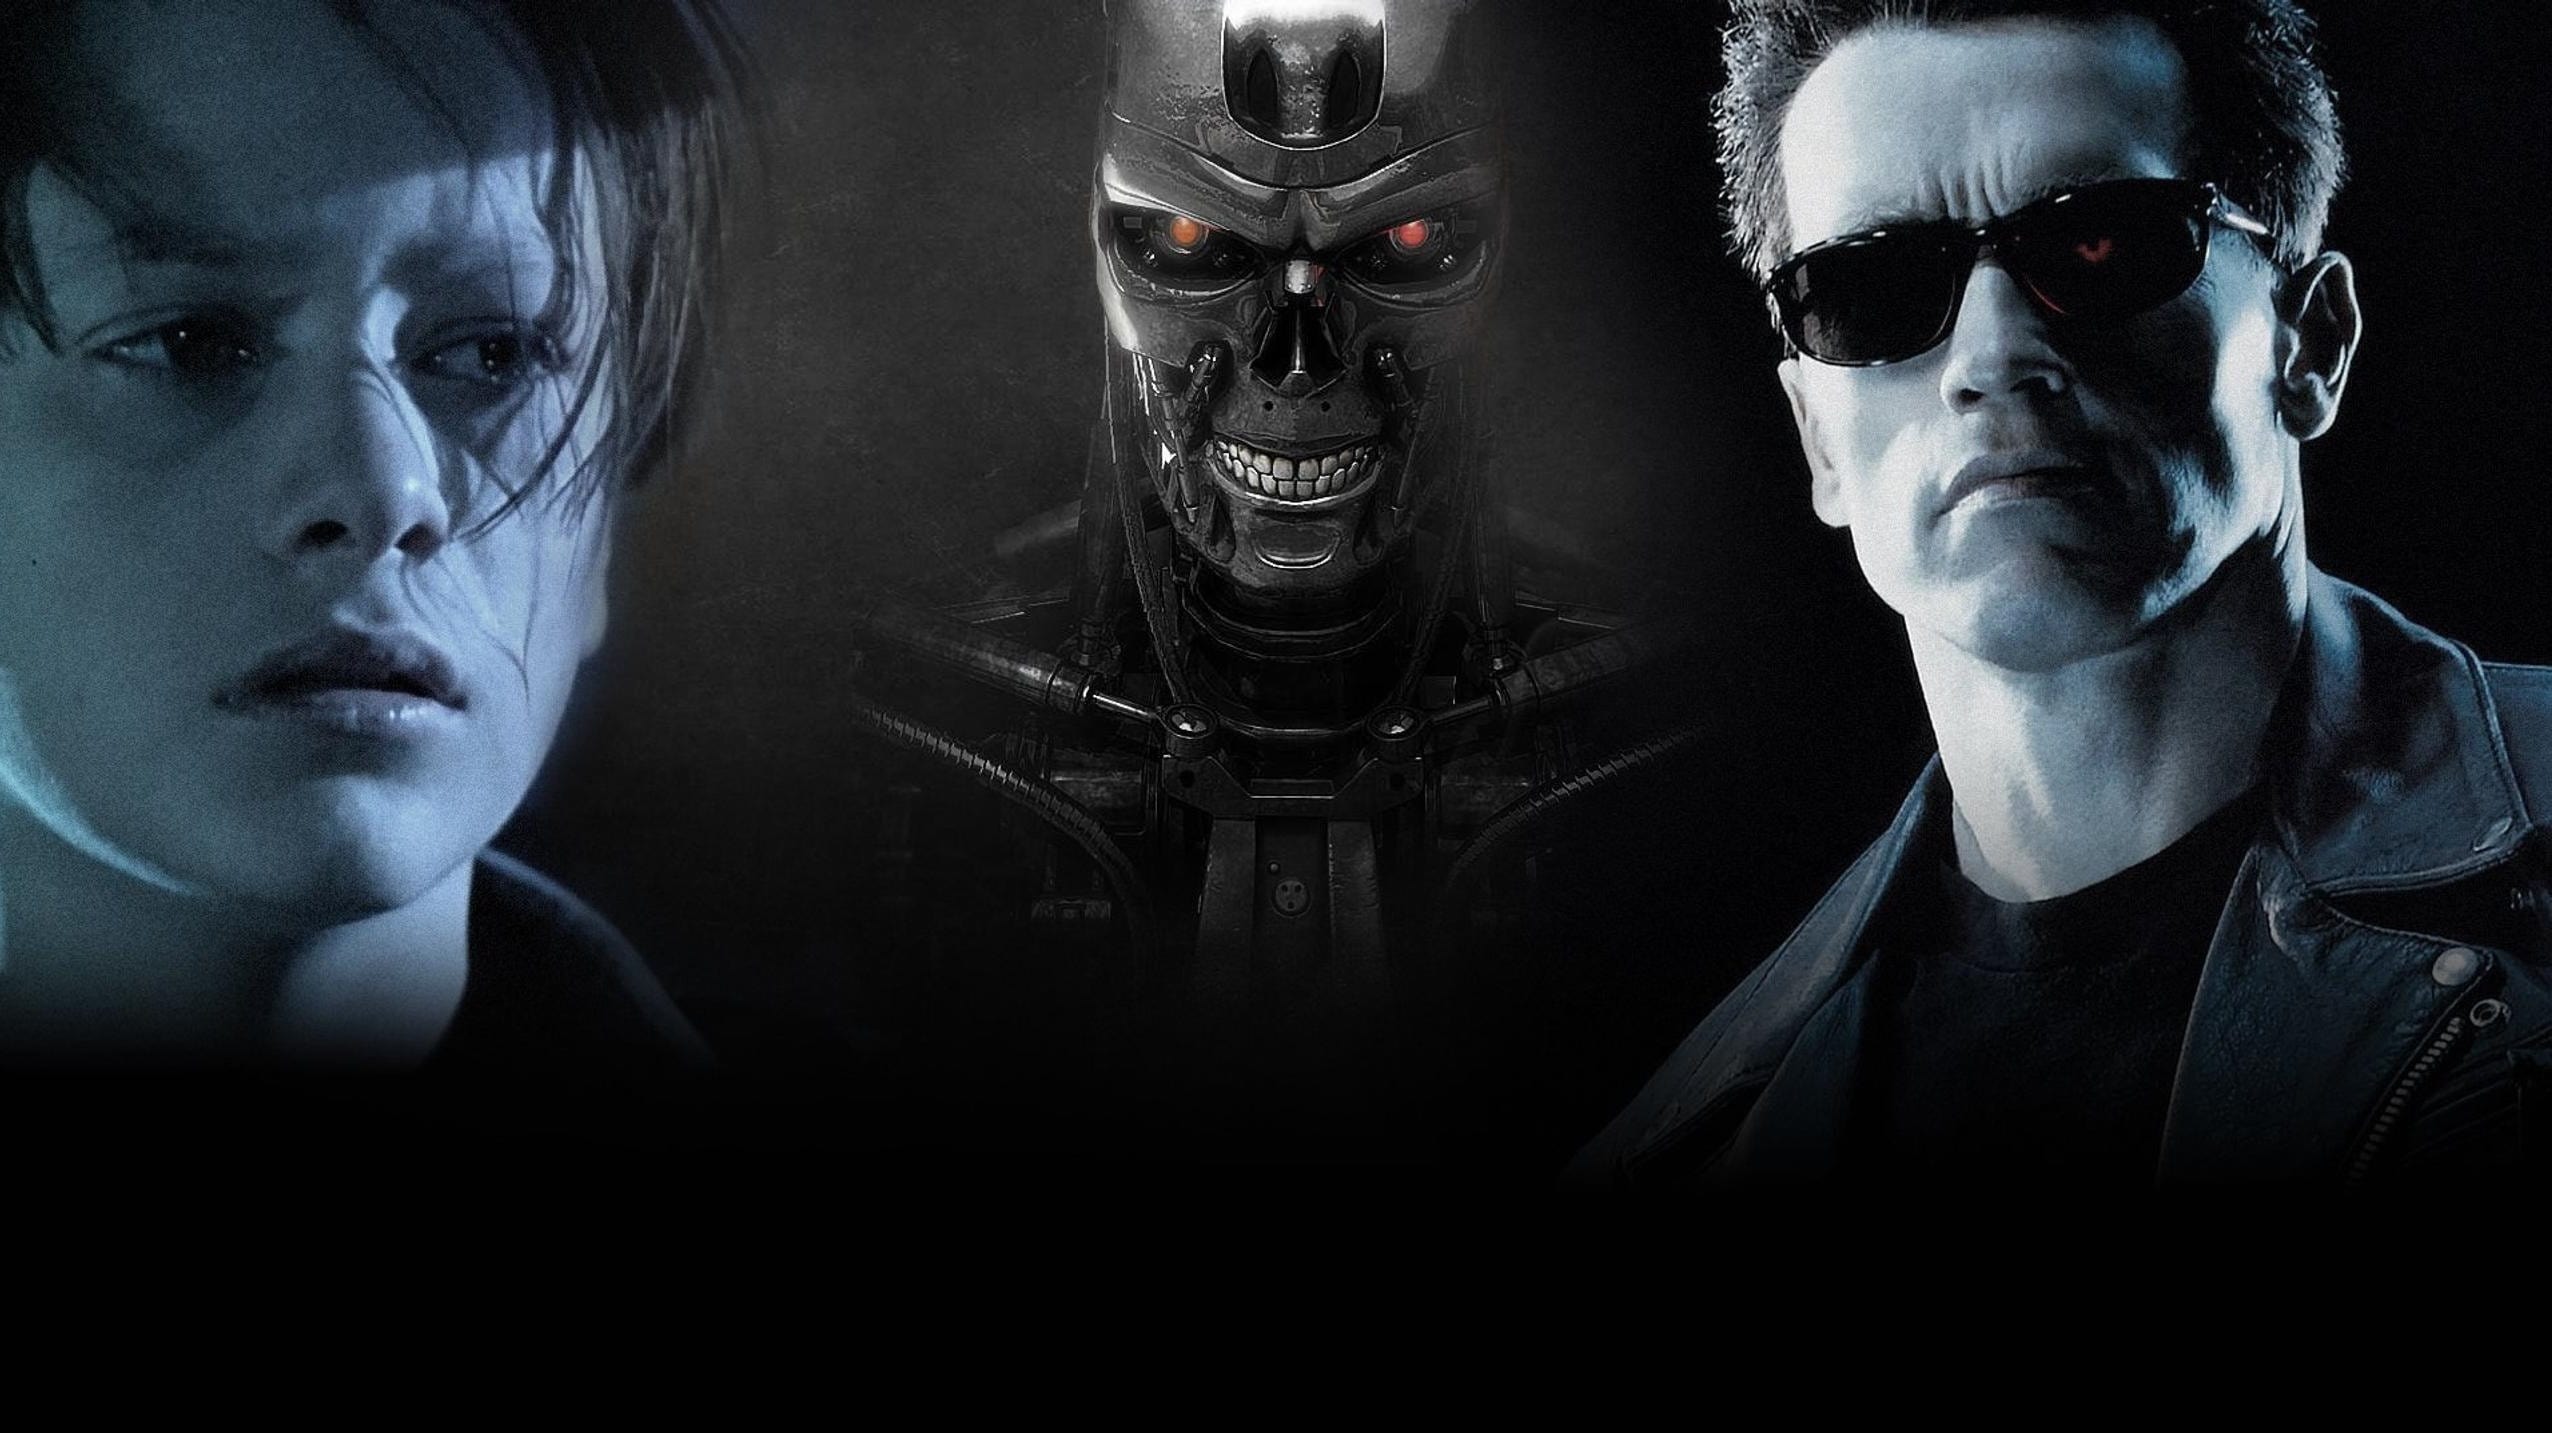 Image du film Terminator 2 : le jugement dernier 3kcmpjl4cycun95rtqbomuh71rijpg